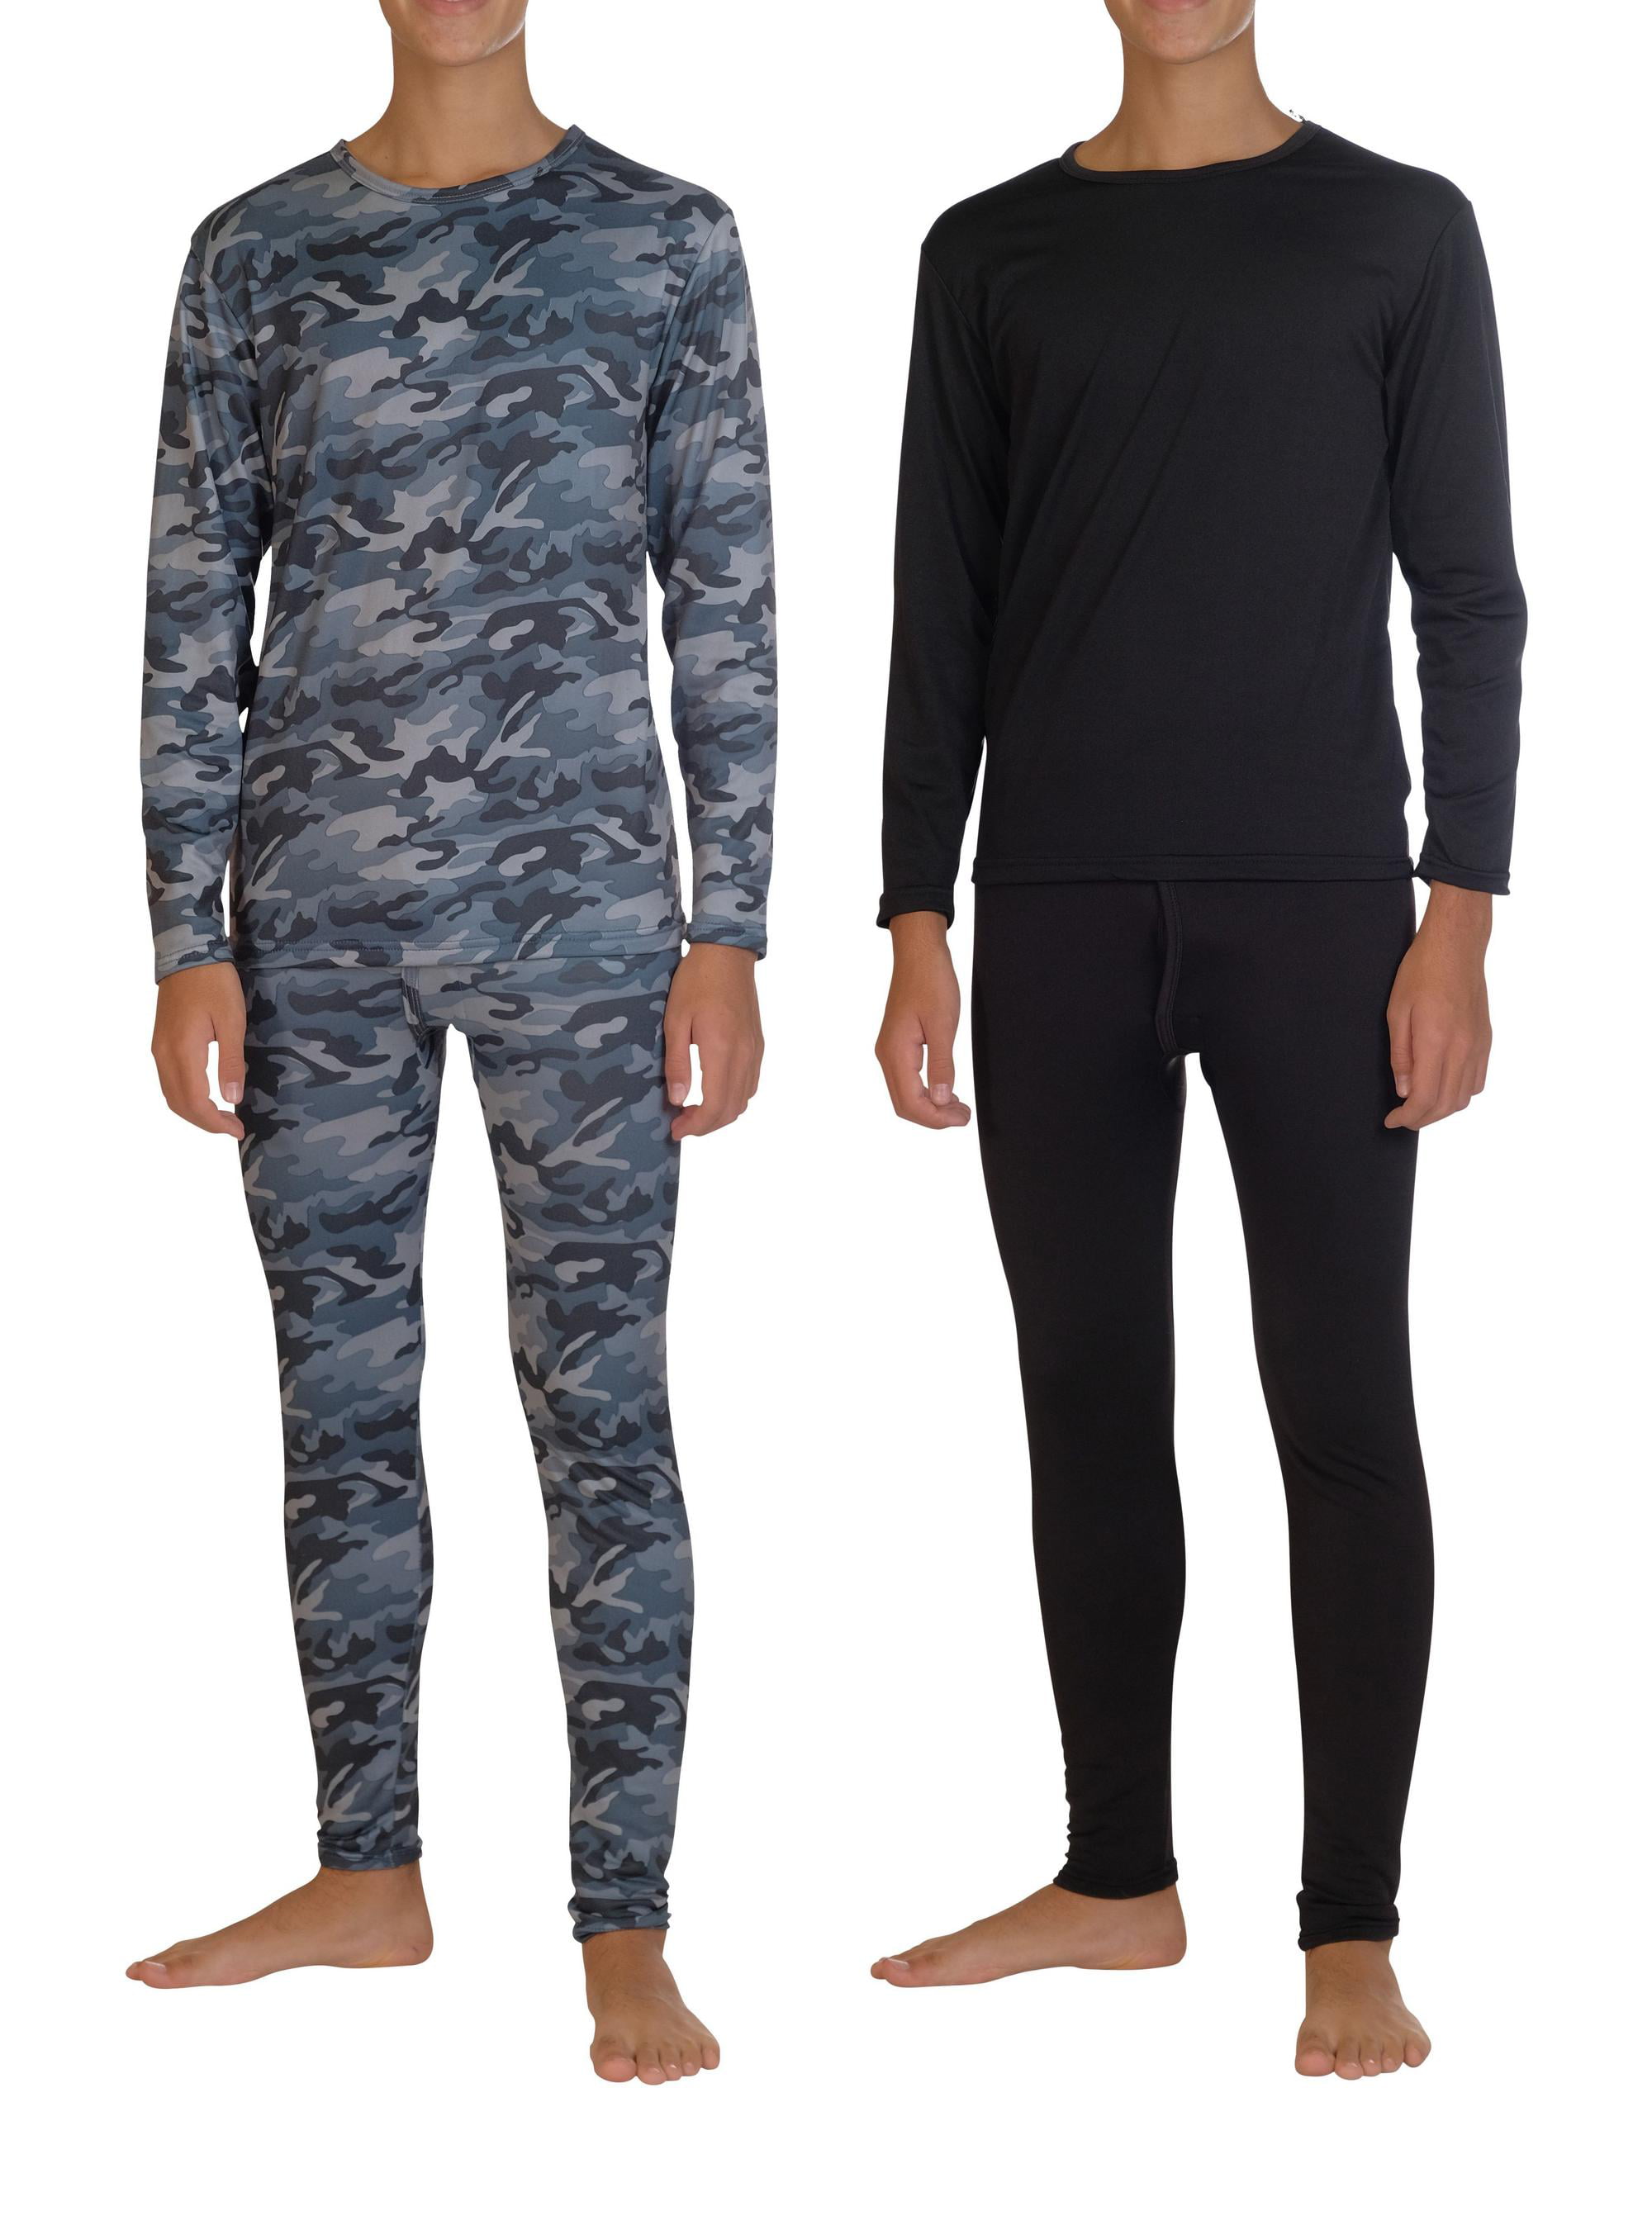 2 Pack Boys Thermal Underwear Set Fleece Lined Long Johns Kids Top & Bottom Knit Base Layer Winter Sets 